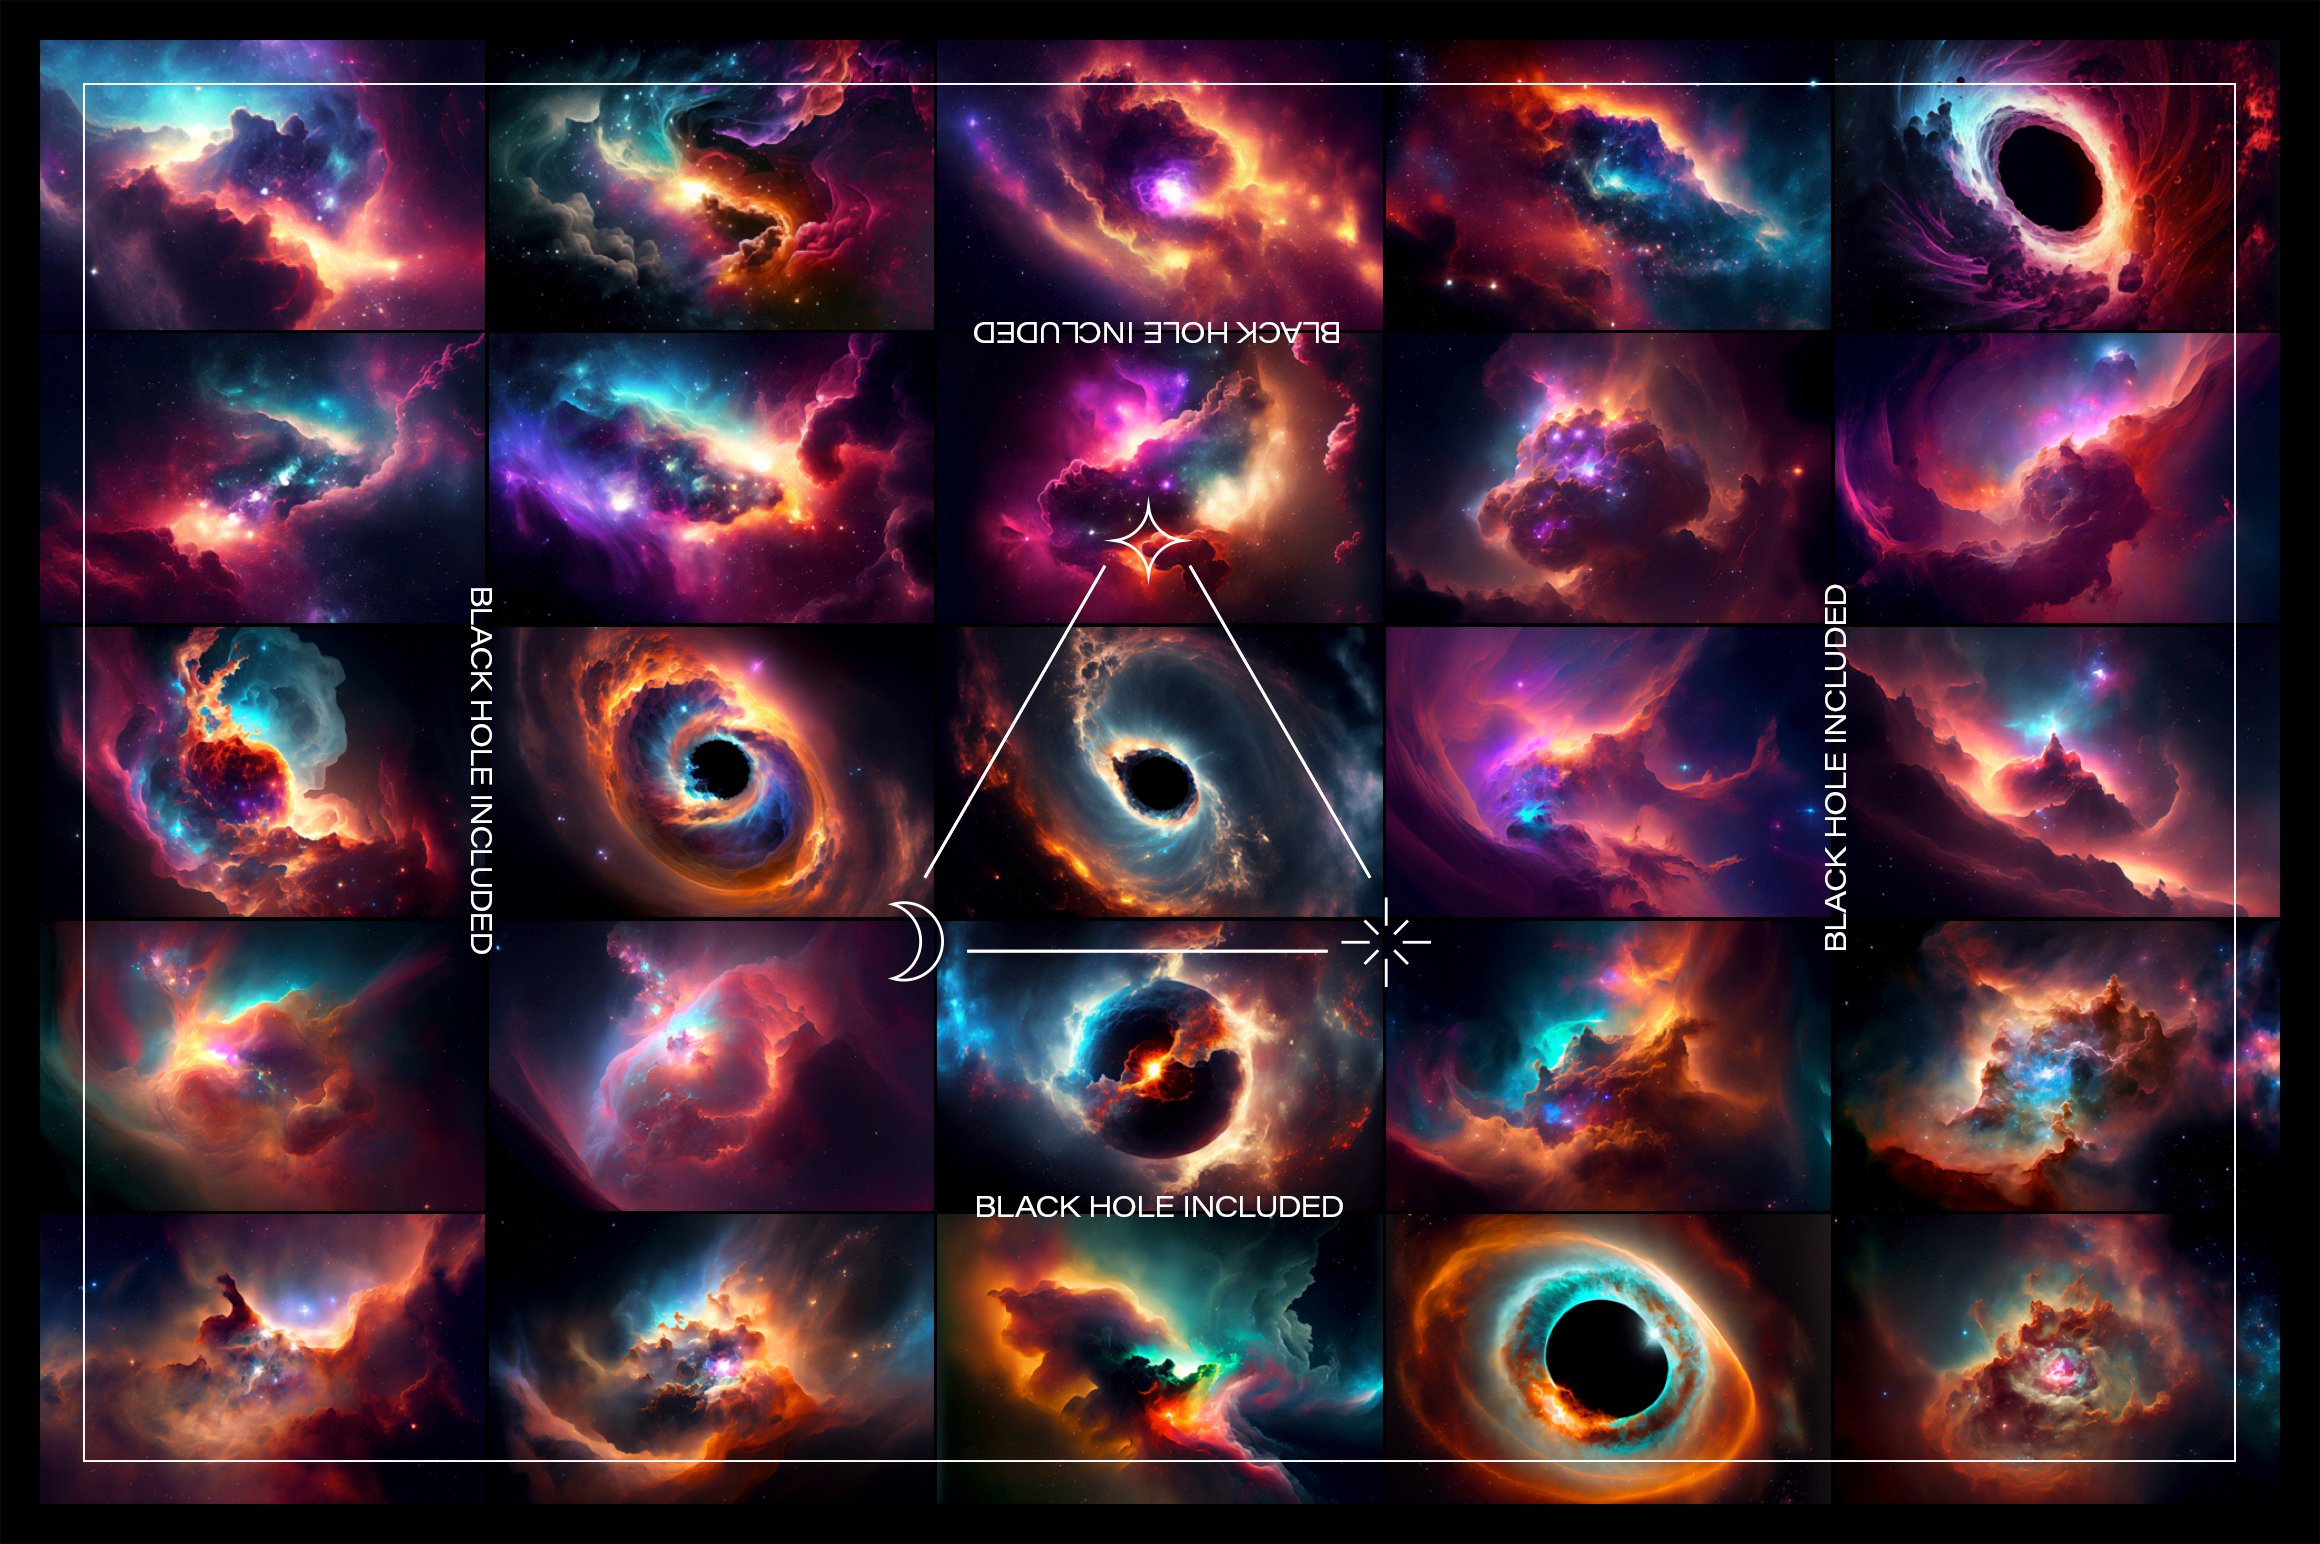 Odyssey | Nebula Backgrounds, Extras preview image.